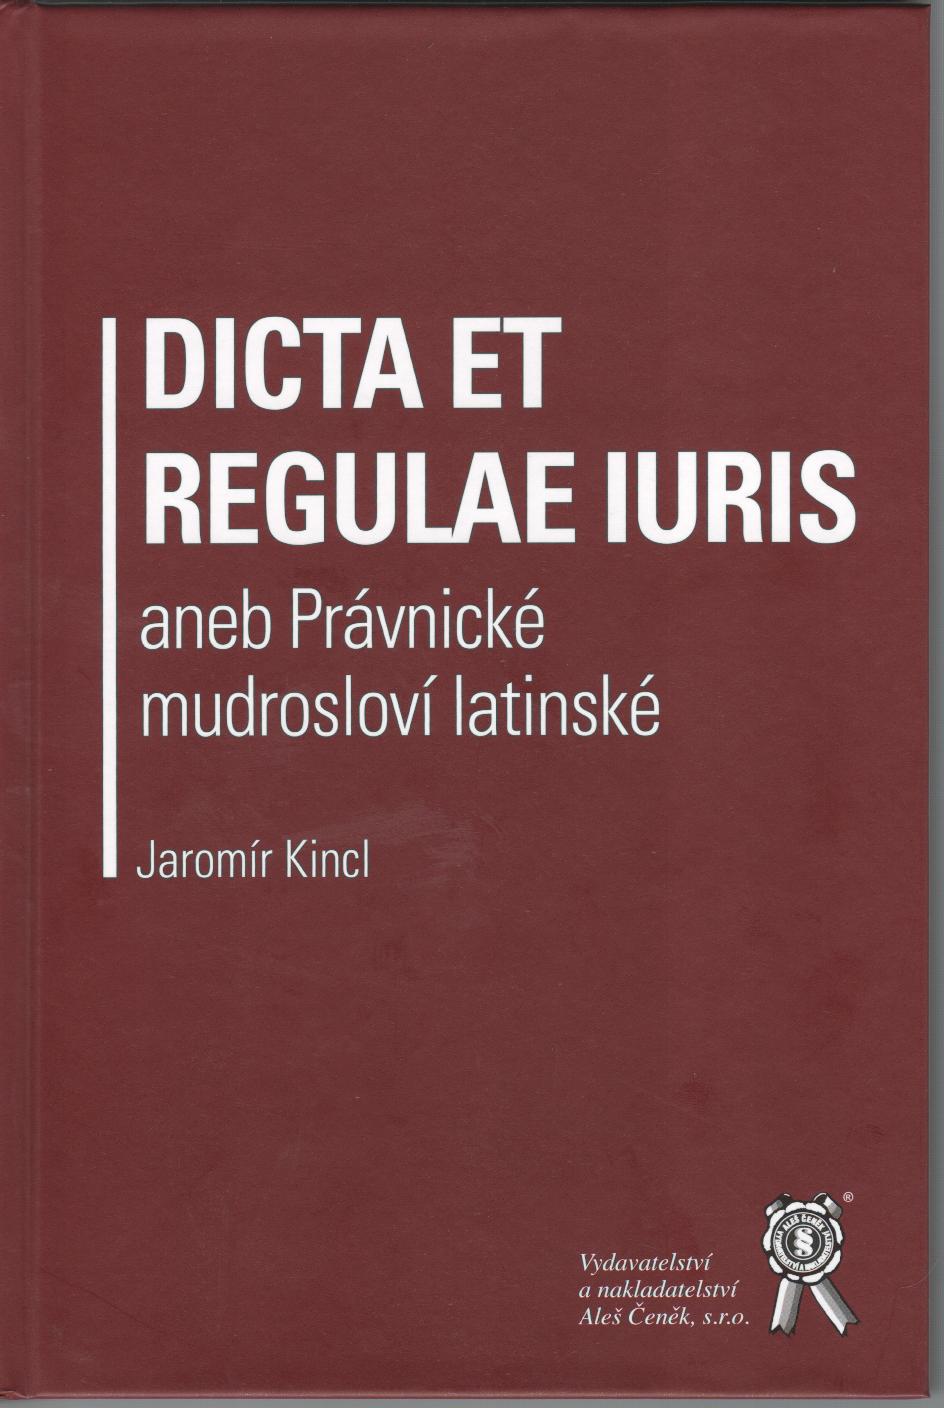 Dicta et Regulae Iuris aneb Právnické mudrosloví latinské